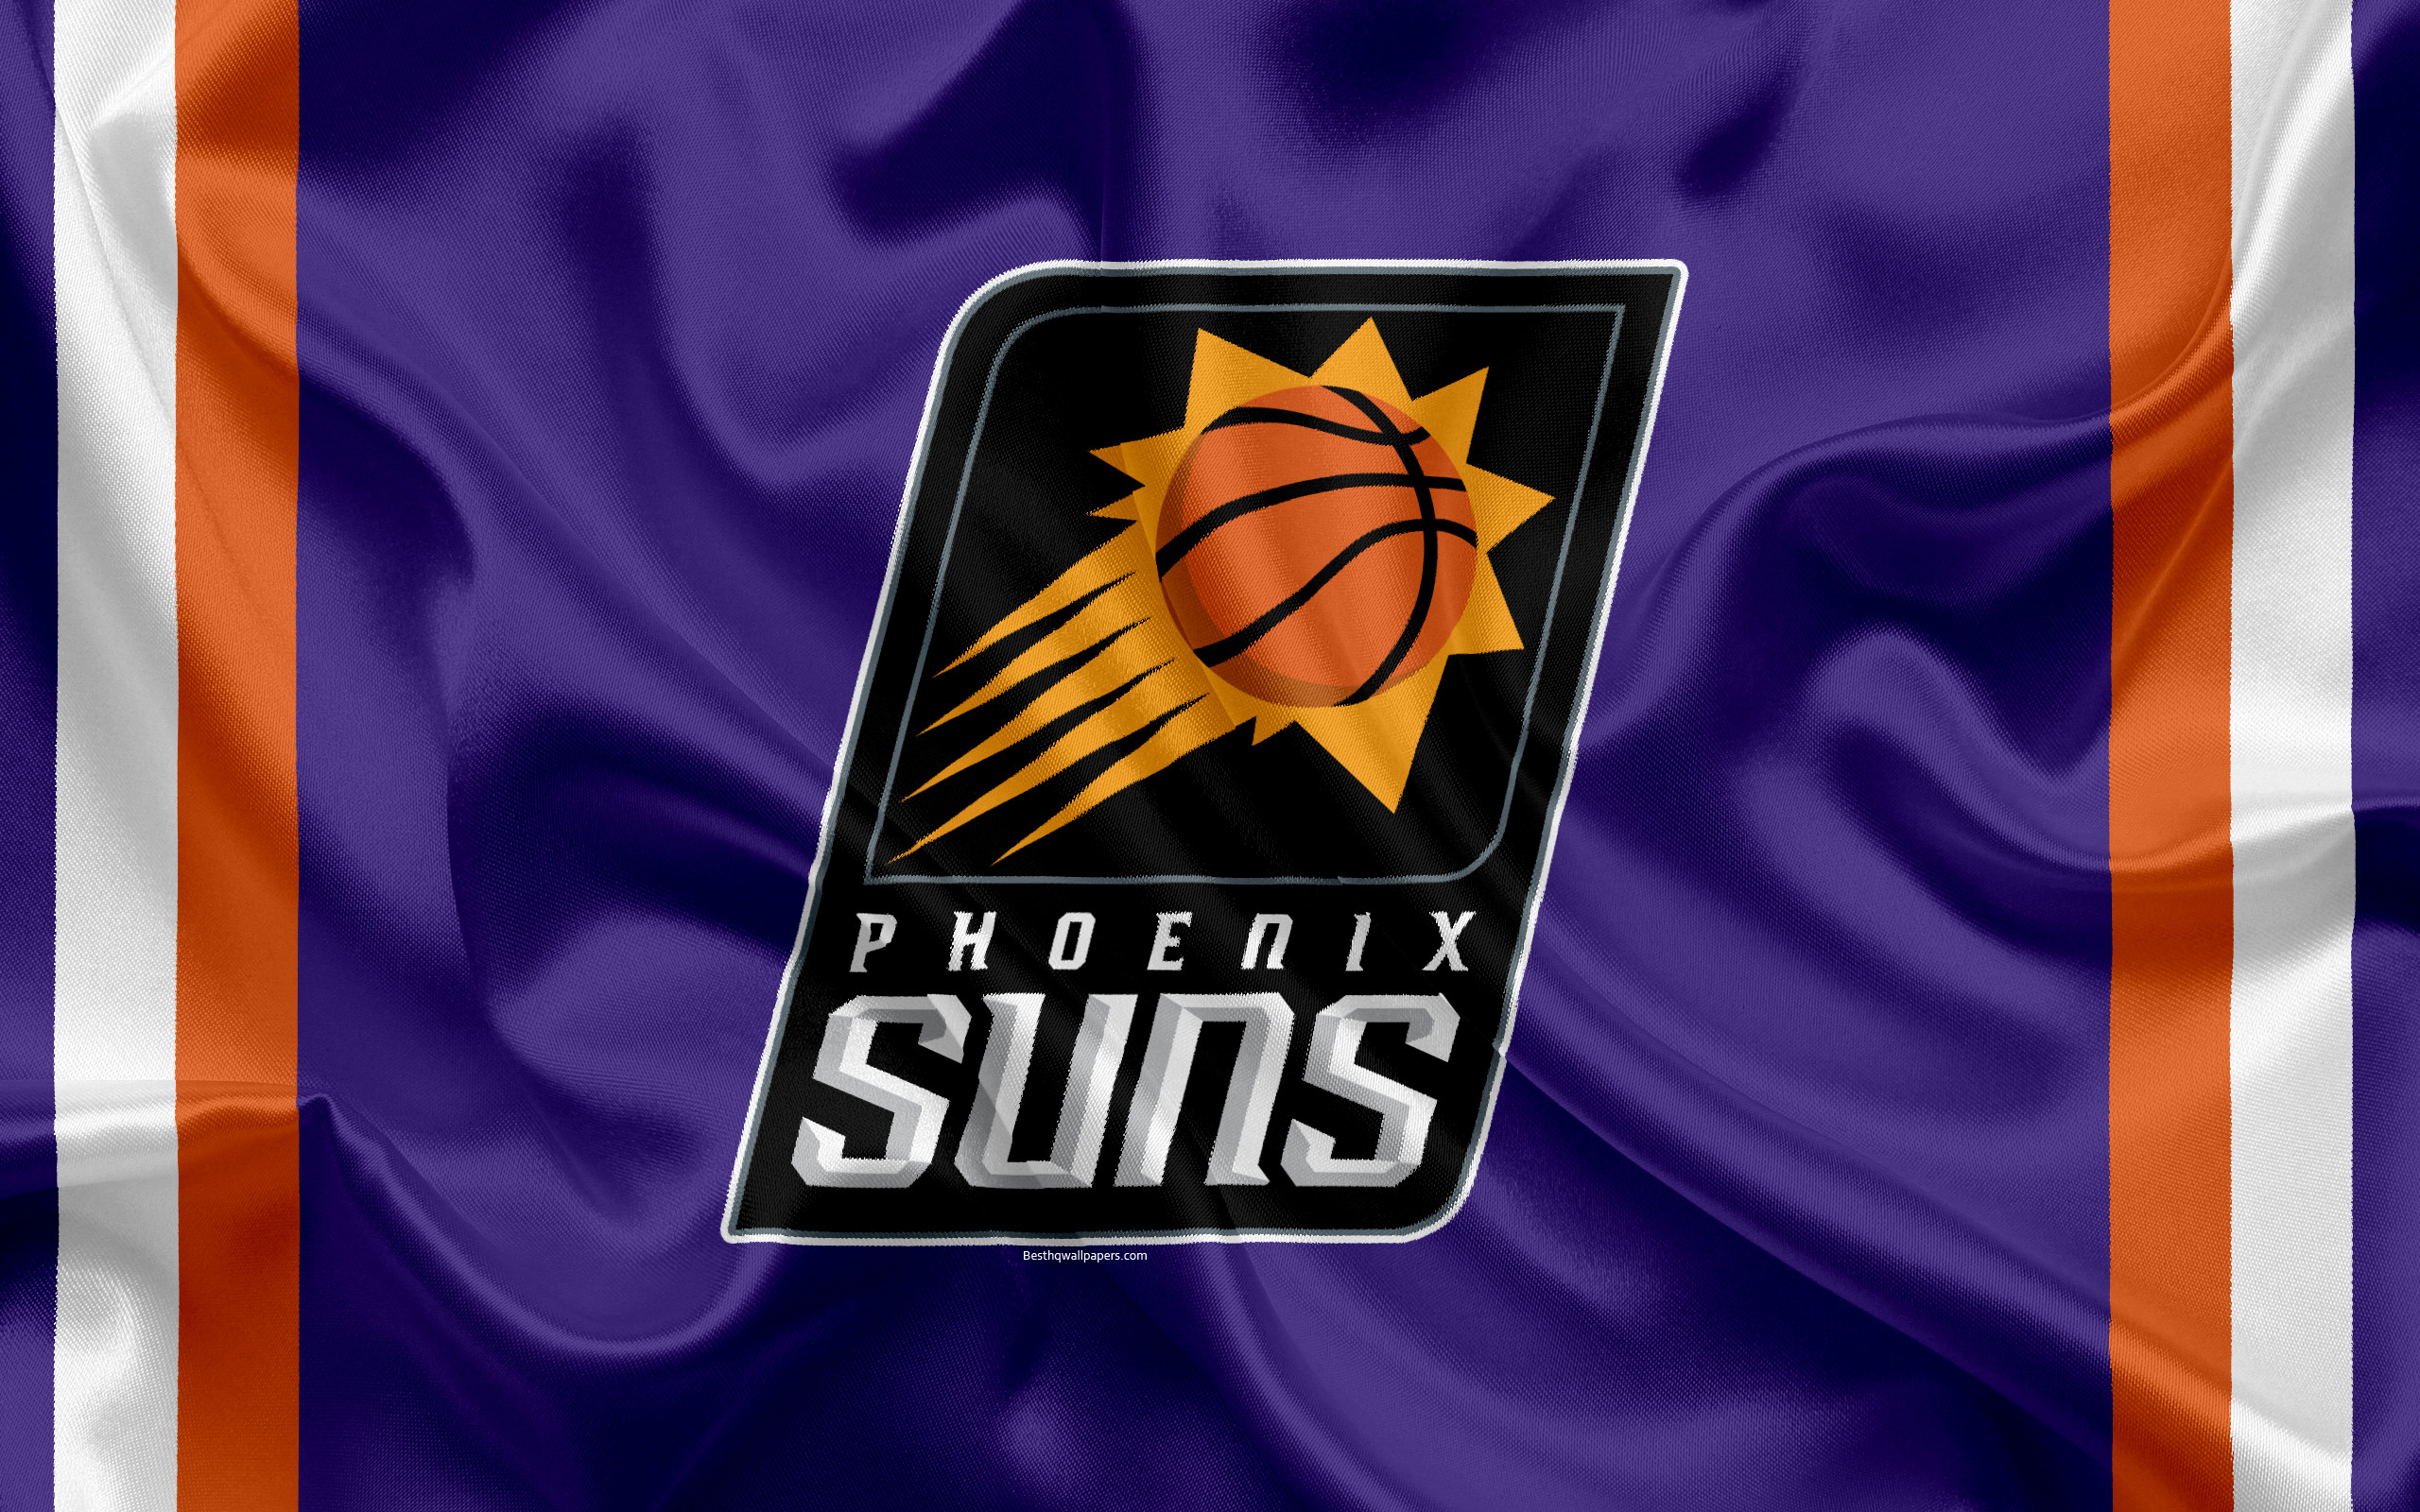 2560x1600 Phoenix Suns, Basketball Club, NBA, emblem, logo, USA, National Basketball